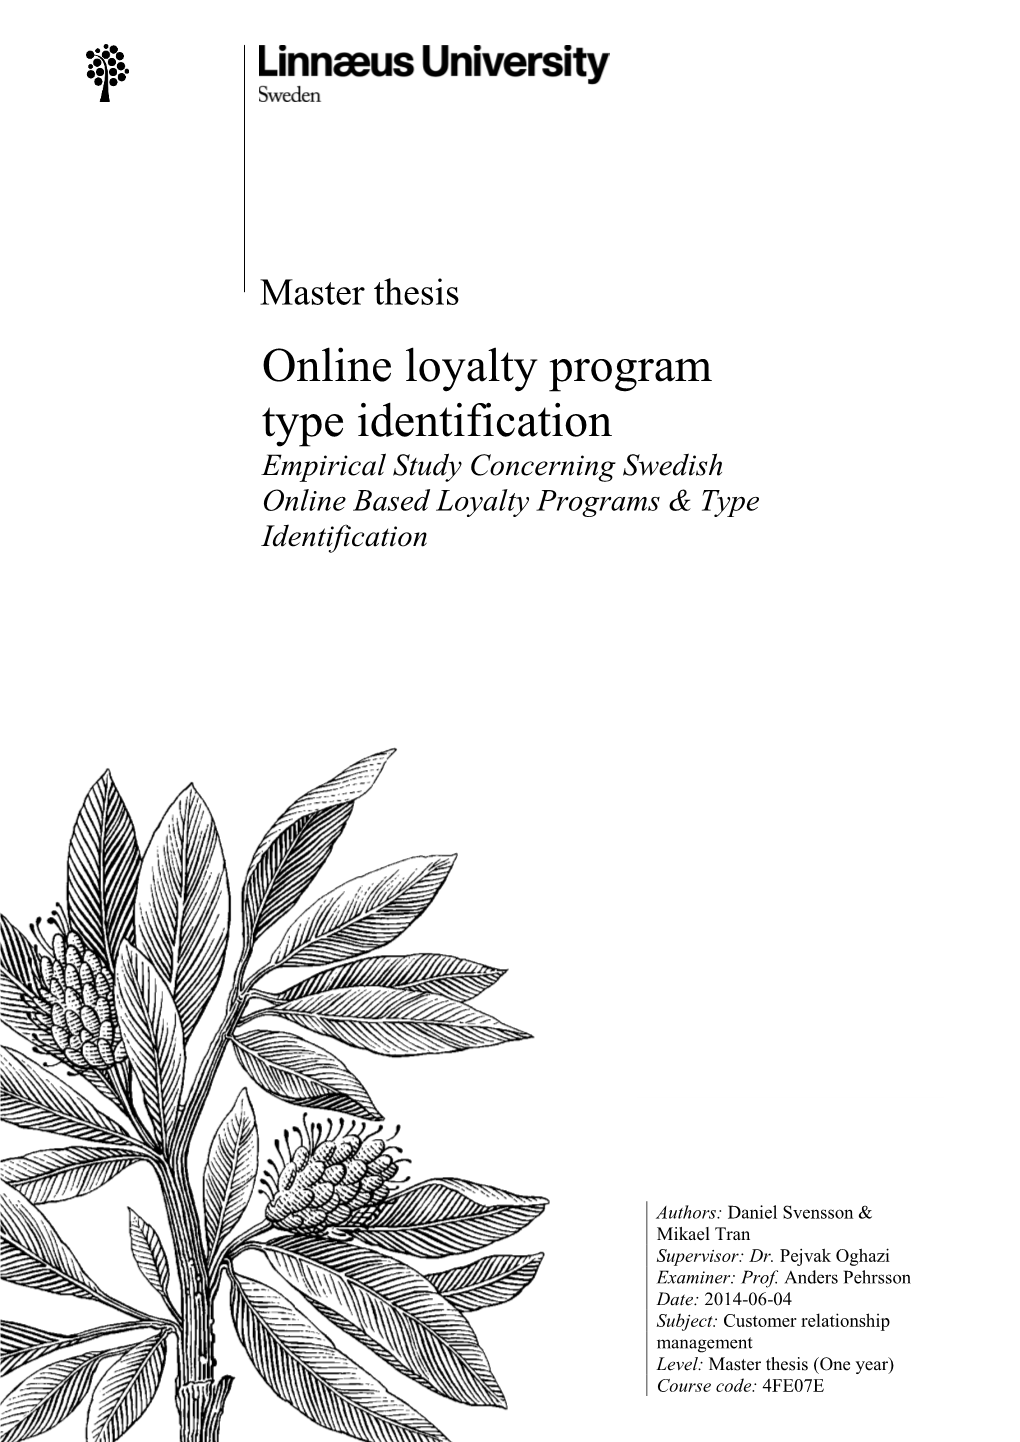 Master Thesis Online Loyalty Program Type Identification Empirical Study Concerning Swedish Online Based Loyalty Programs & Type Identification